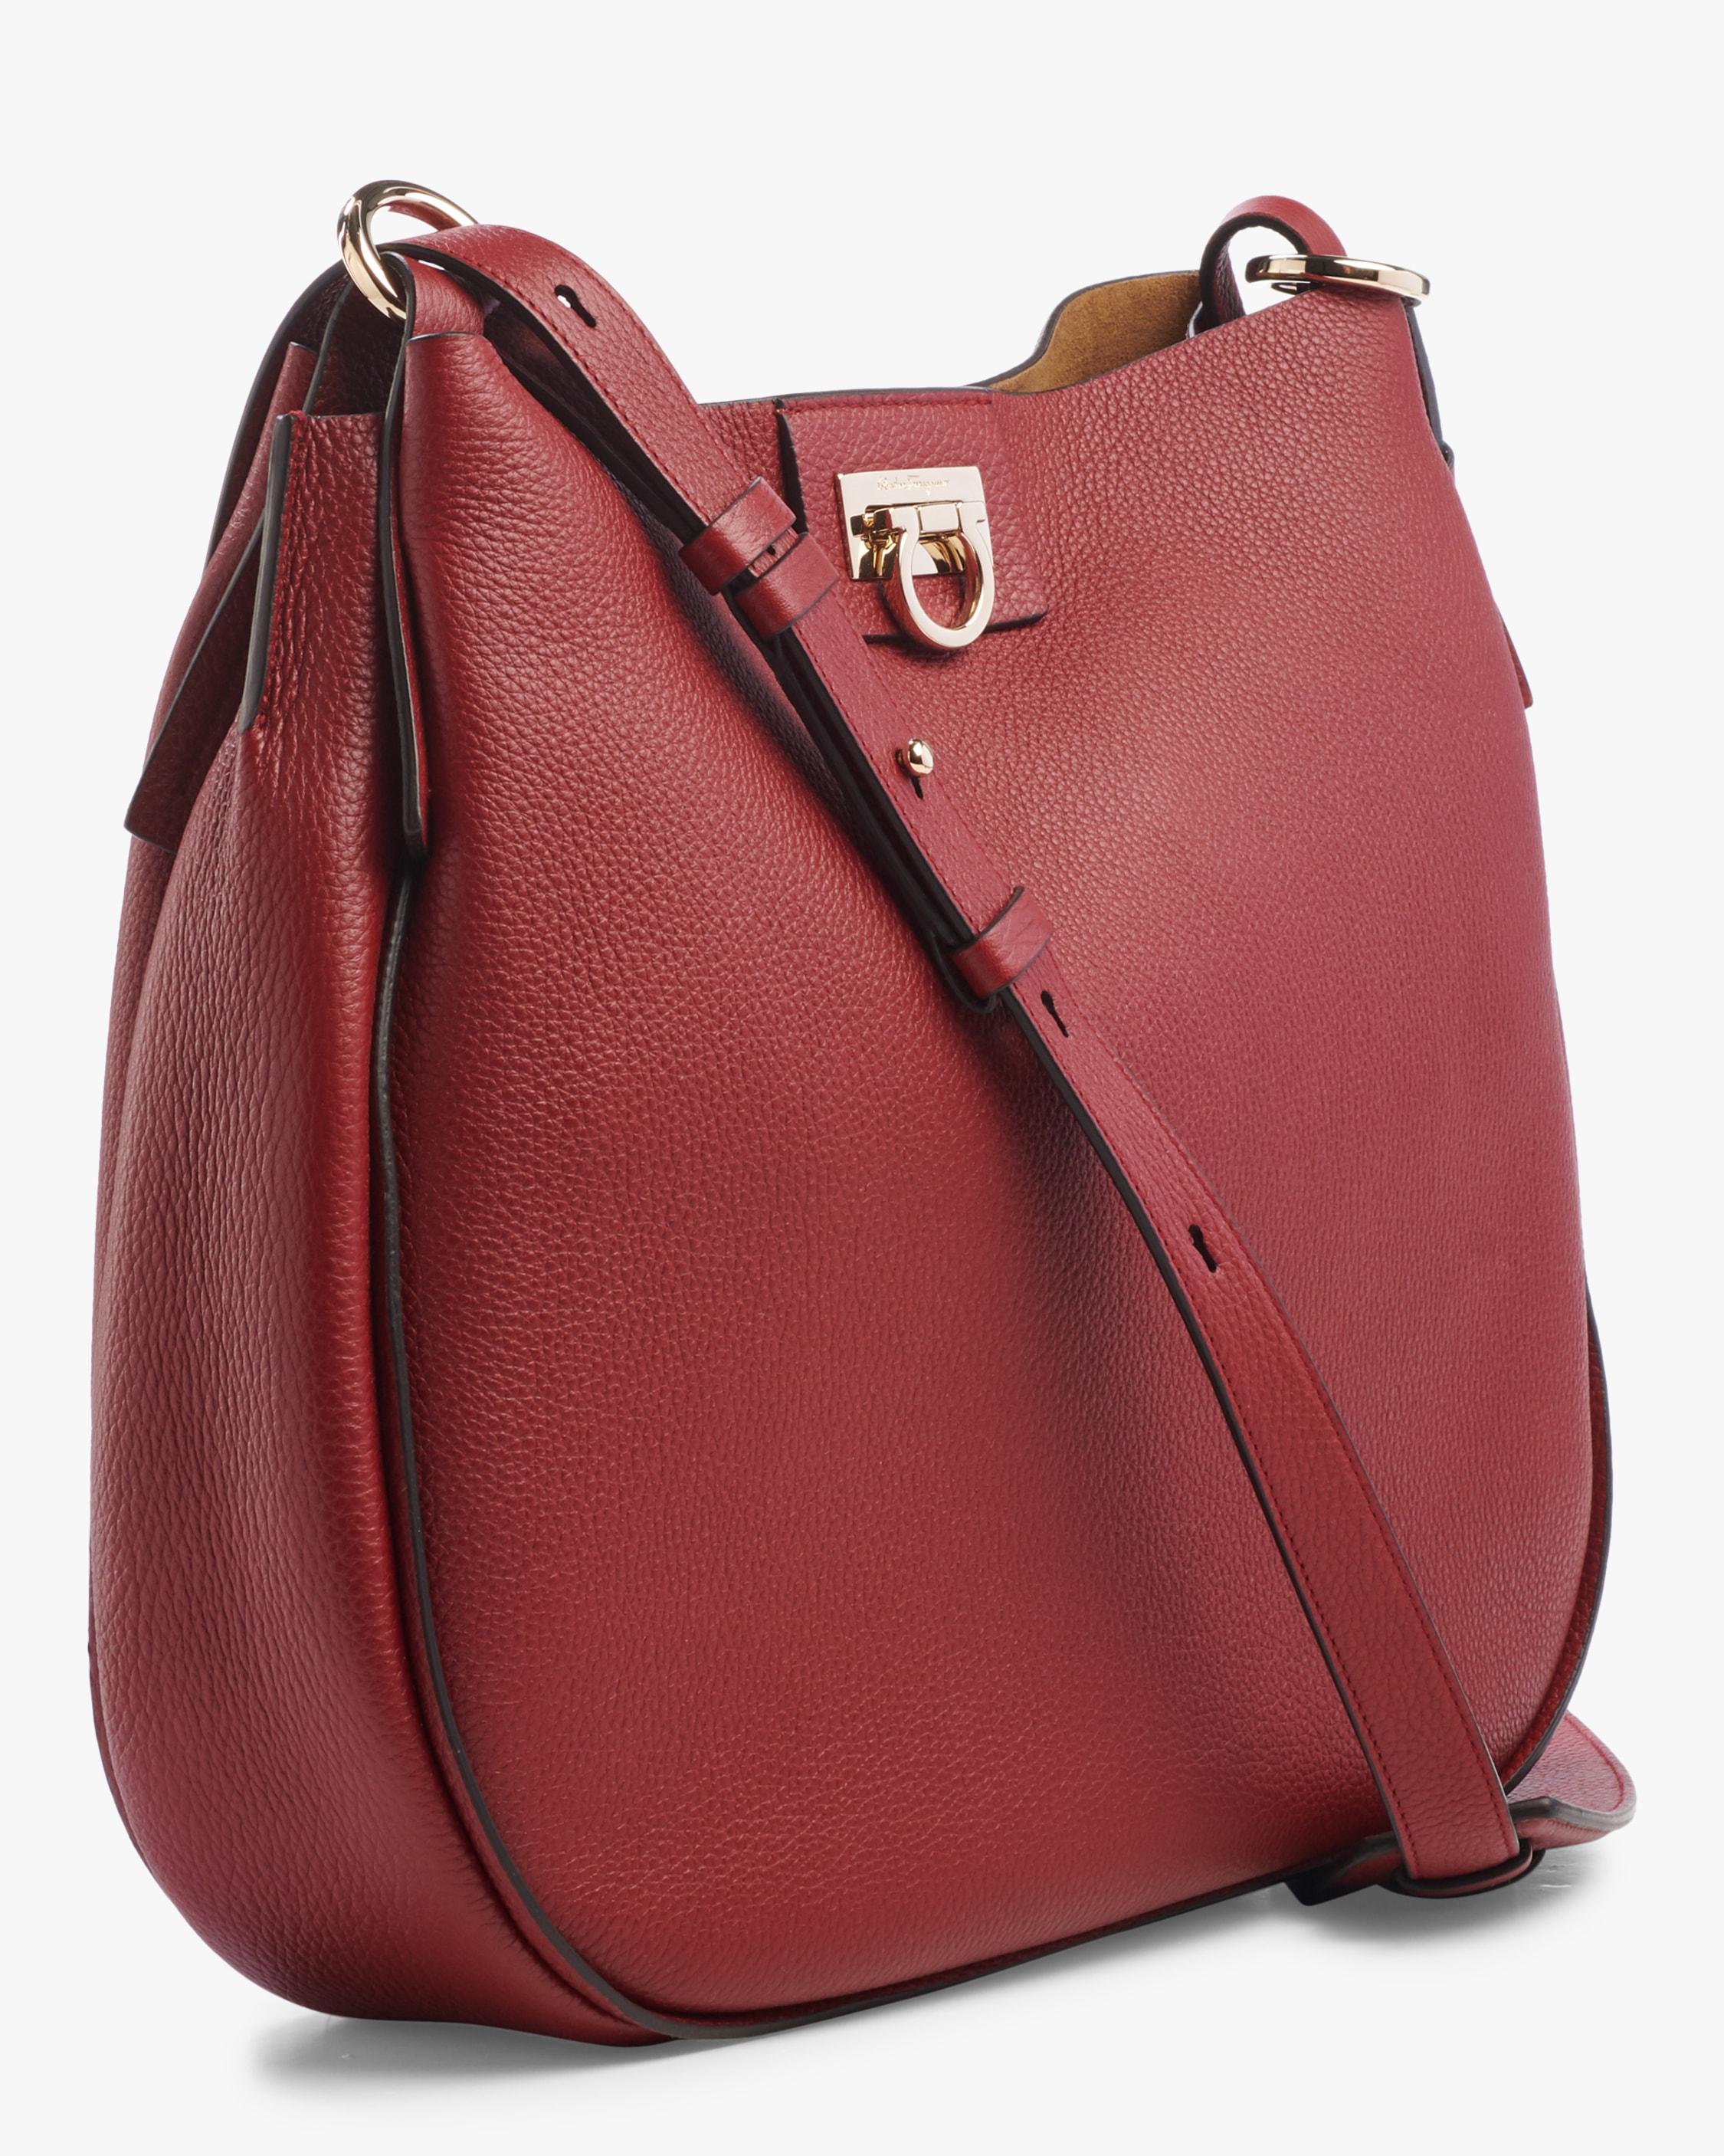 Ferragamo Leather Runway Reverse Hobo Bag in Red - Lyst